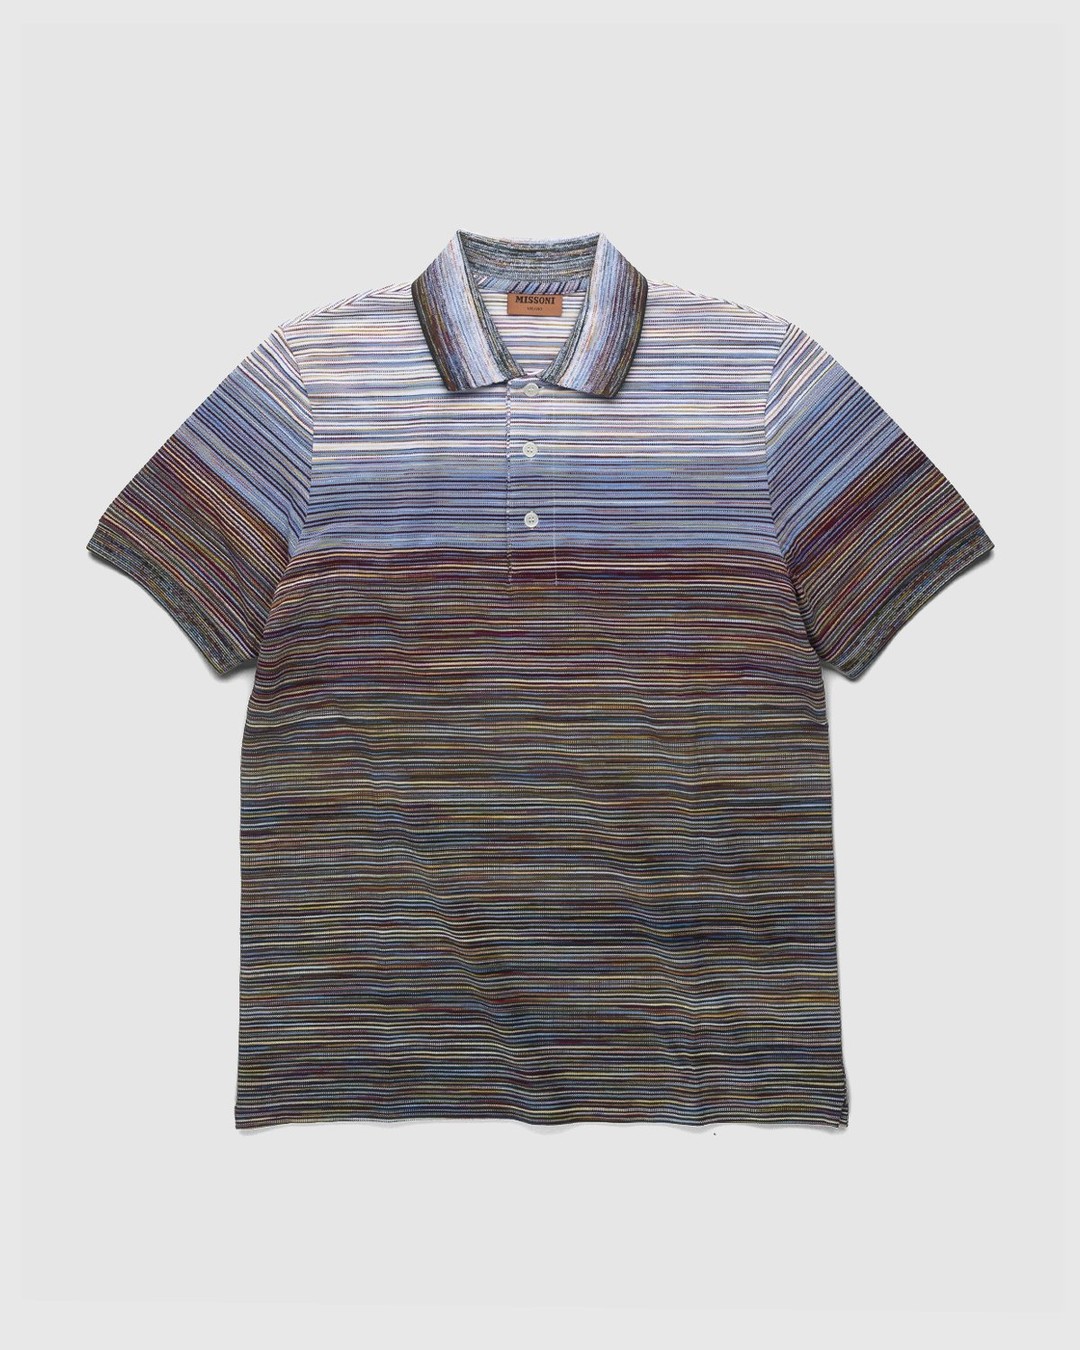 Missoni – Pattern Short-Sleeve Polo Militare Bordo - Shirts - Multi - Image 1